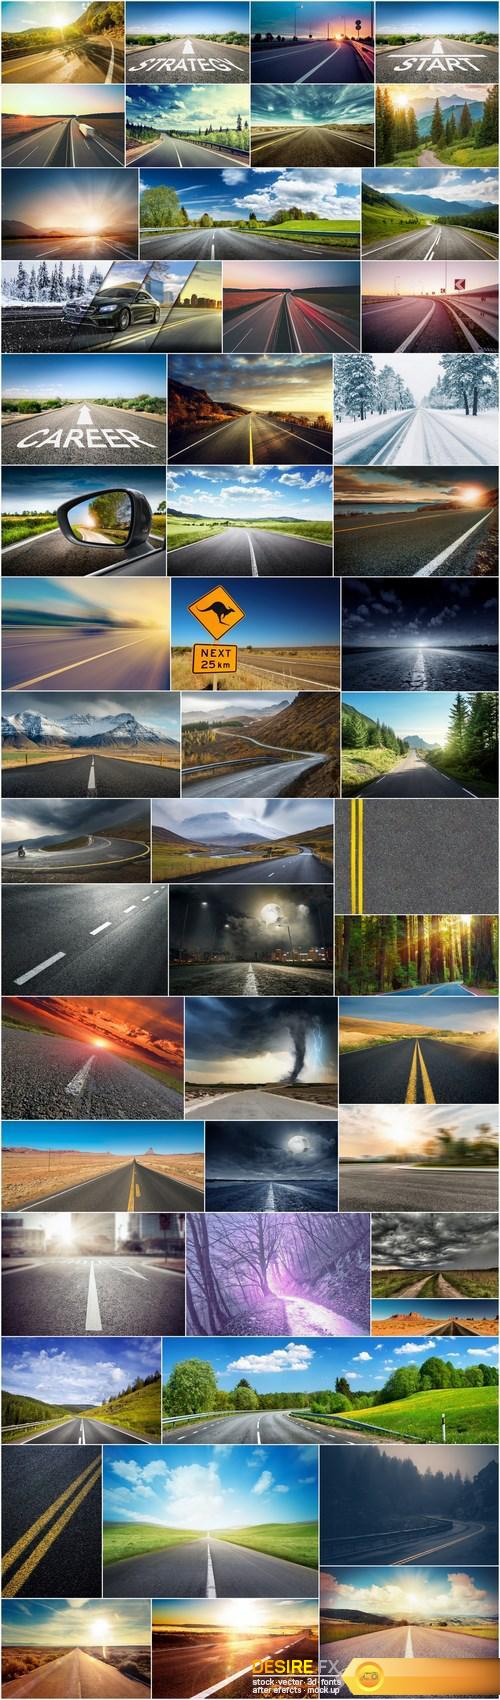 Roads and highway - 50xUHQ JPEG